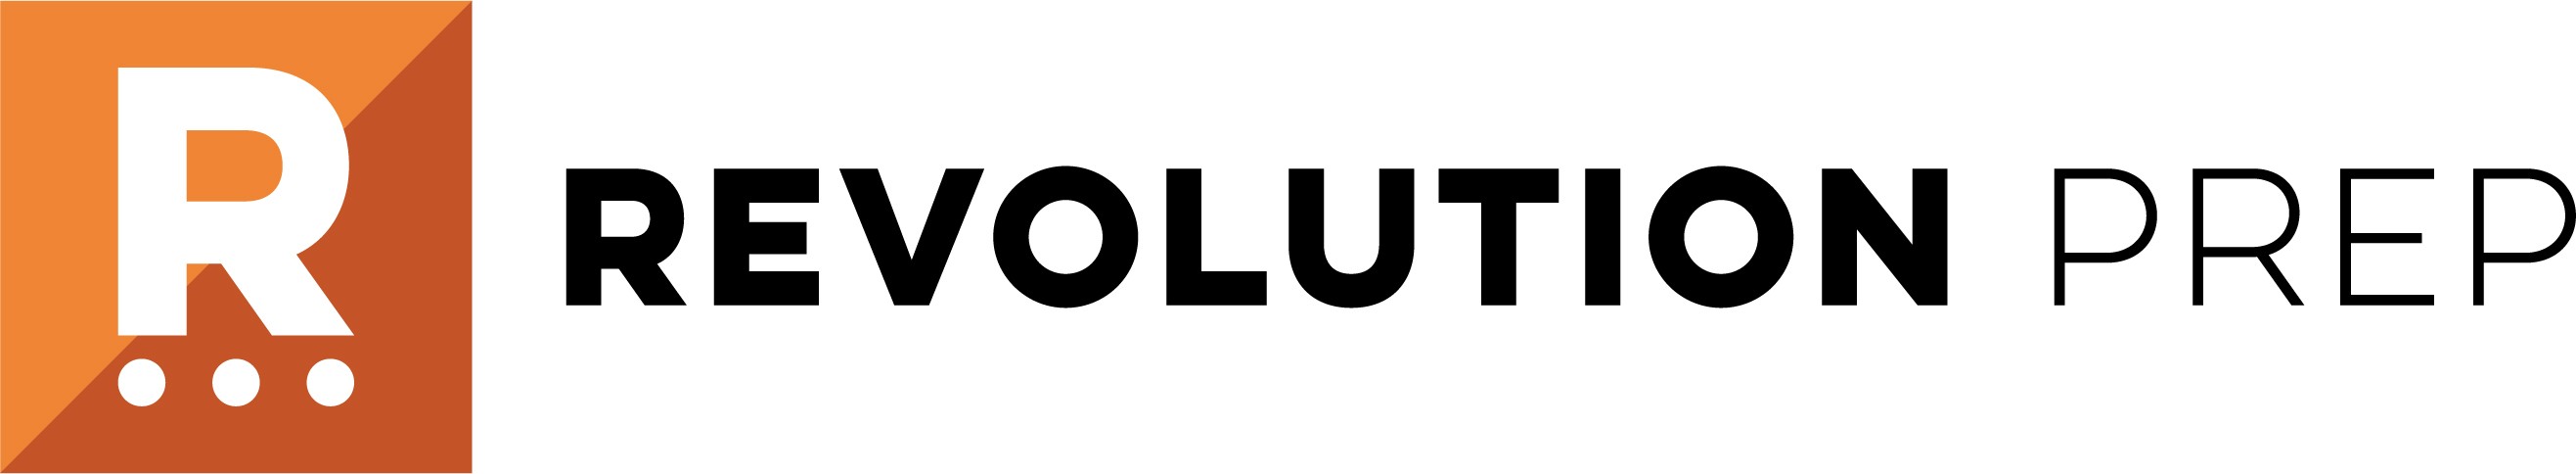 Revolution Prep logo